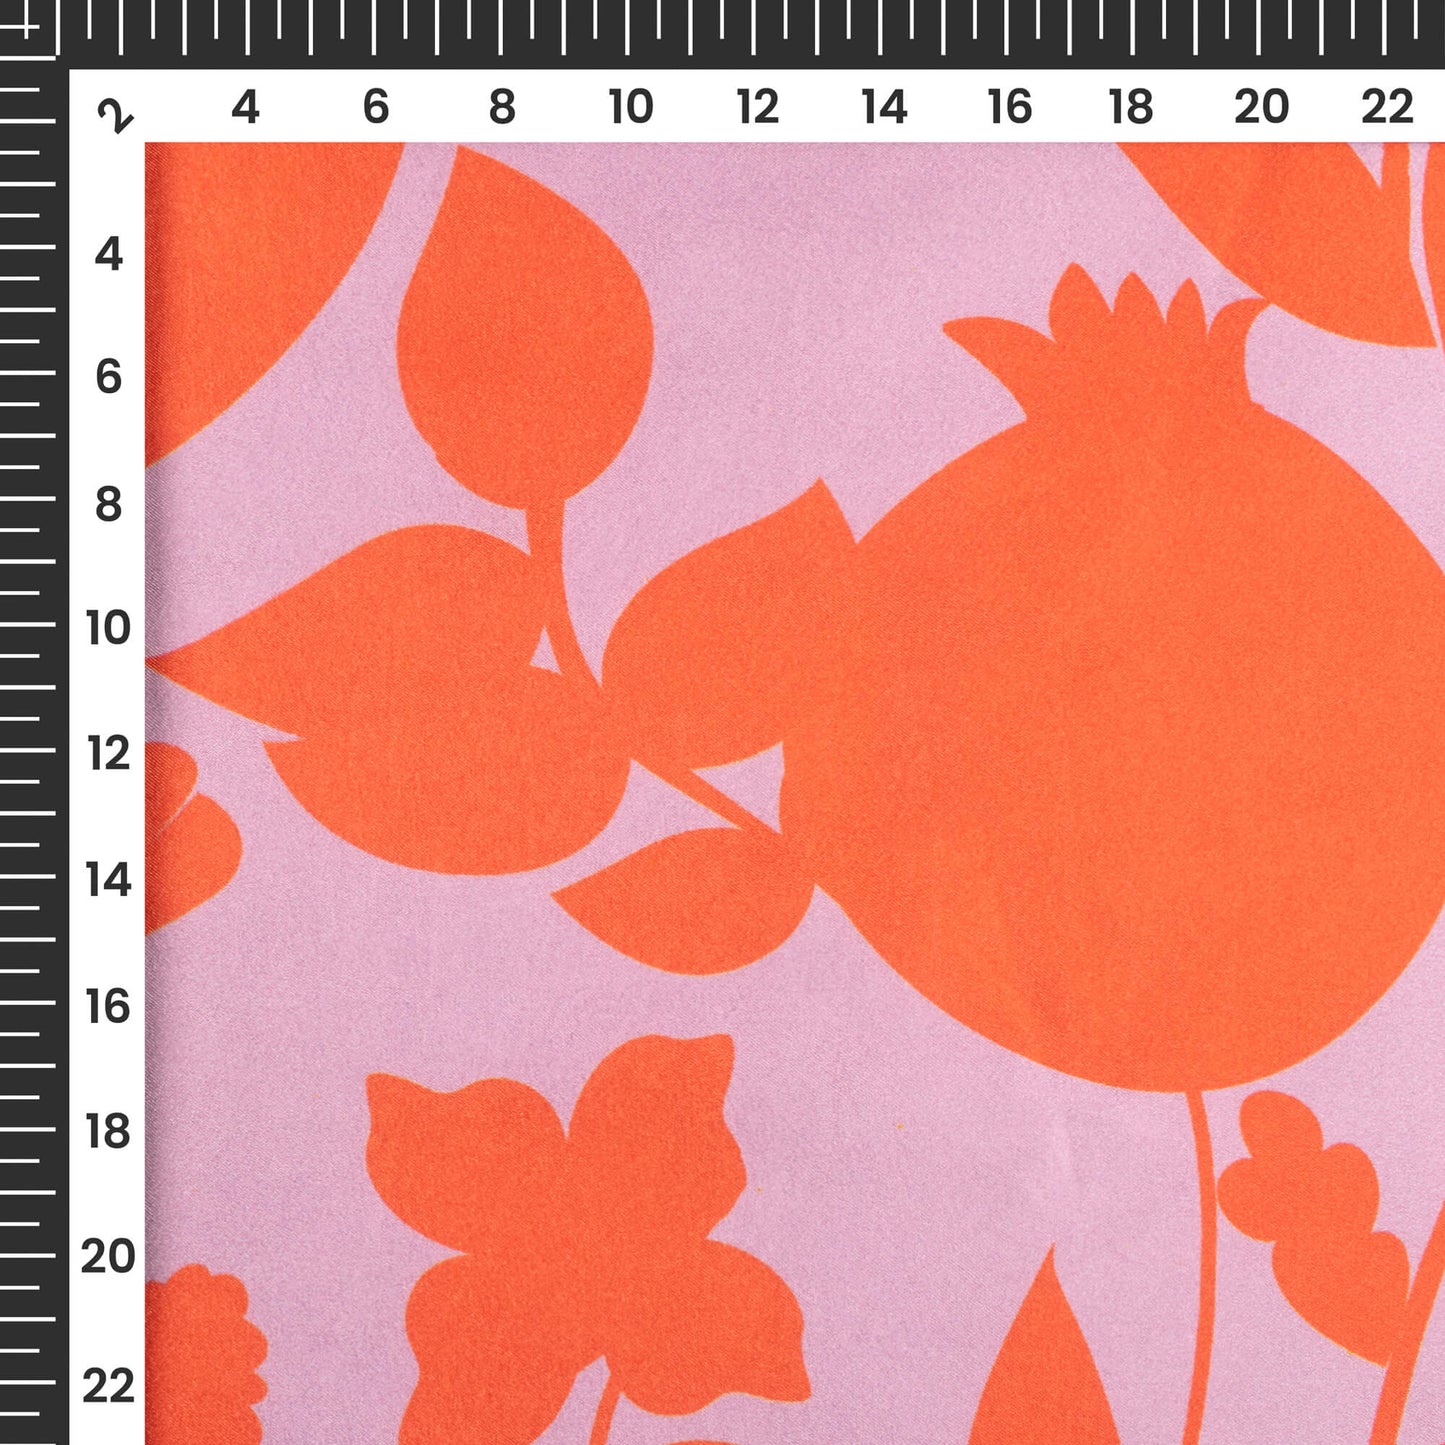 Lavender Purple And Orange Floral Digital Print Japan Satin Fabric